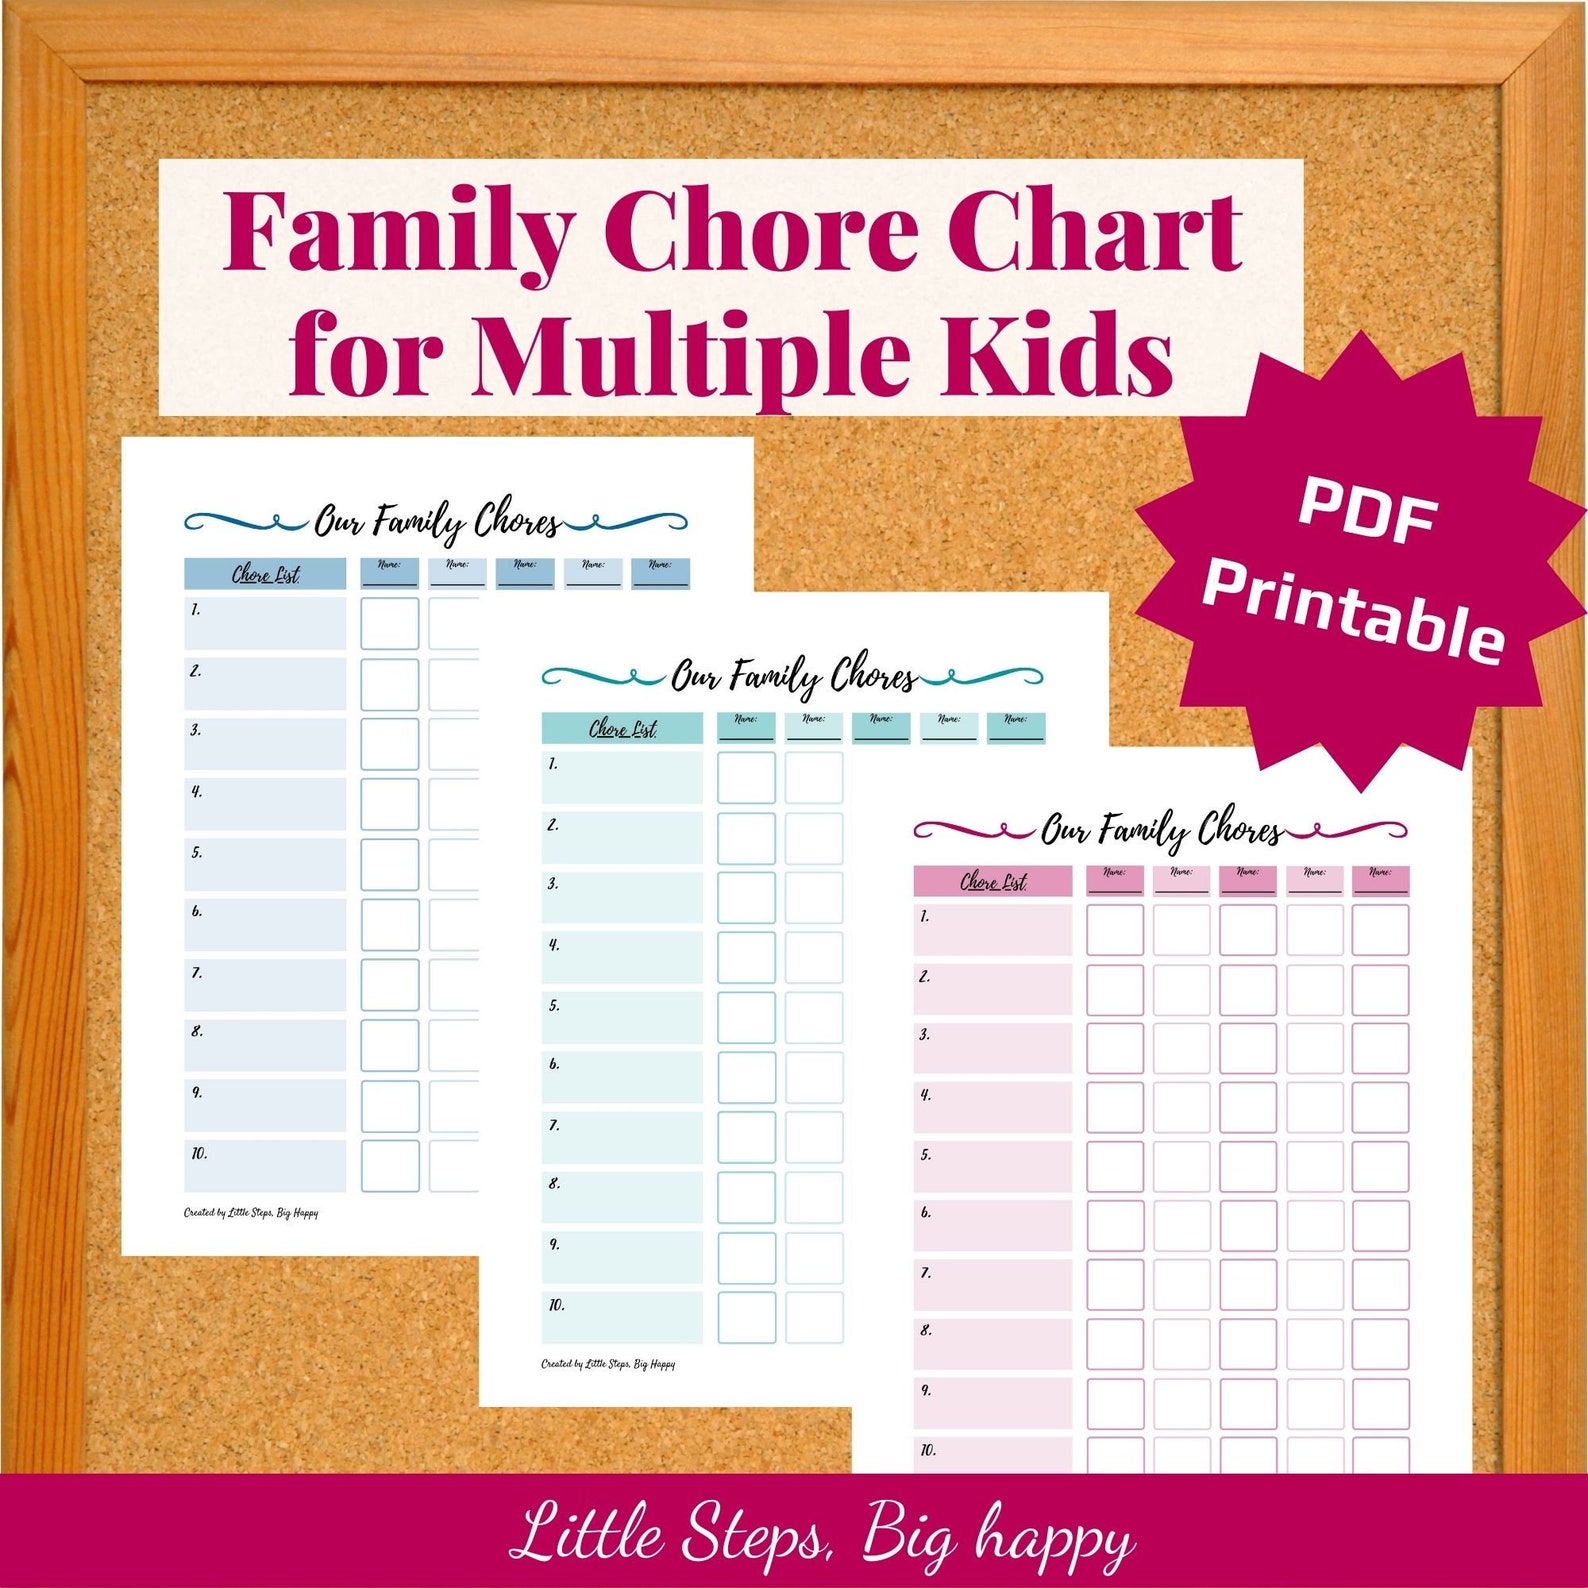 Downloadable Chore Chart